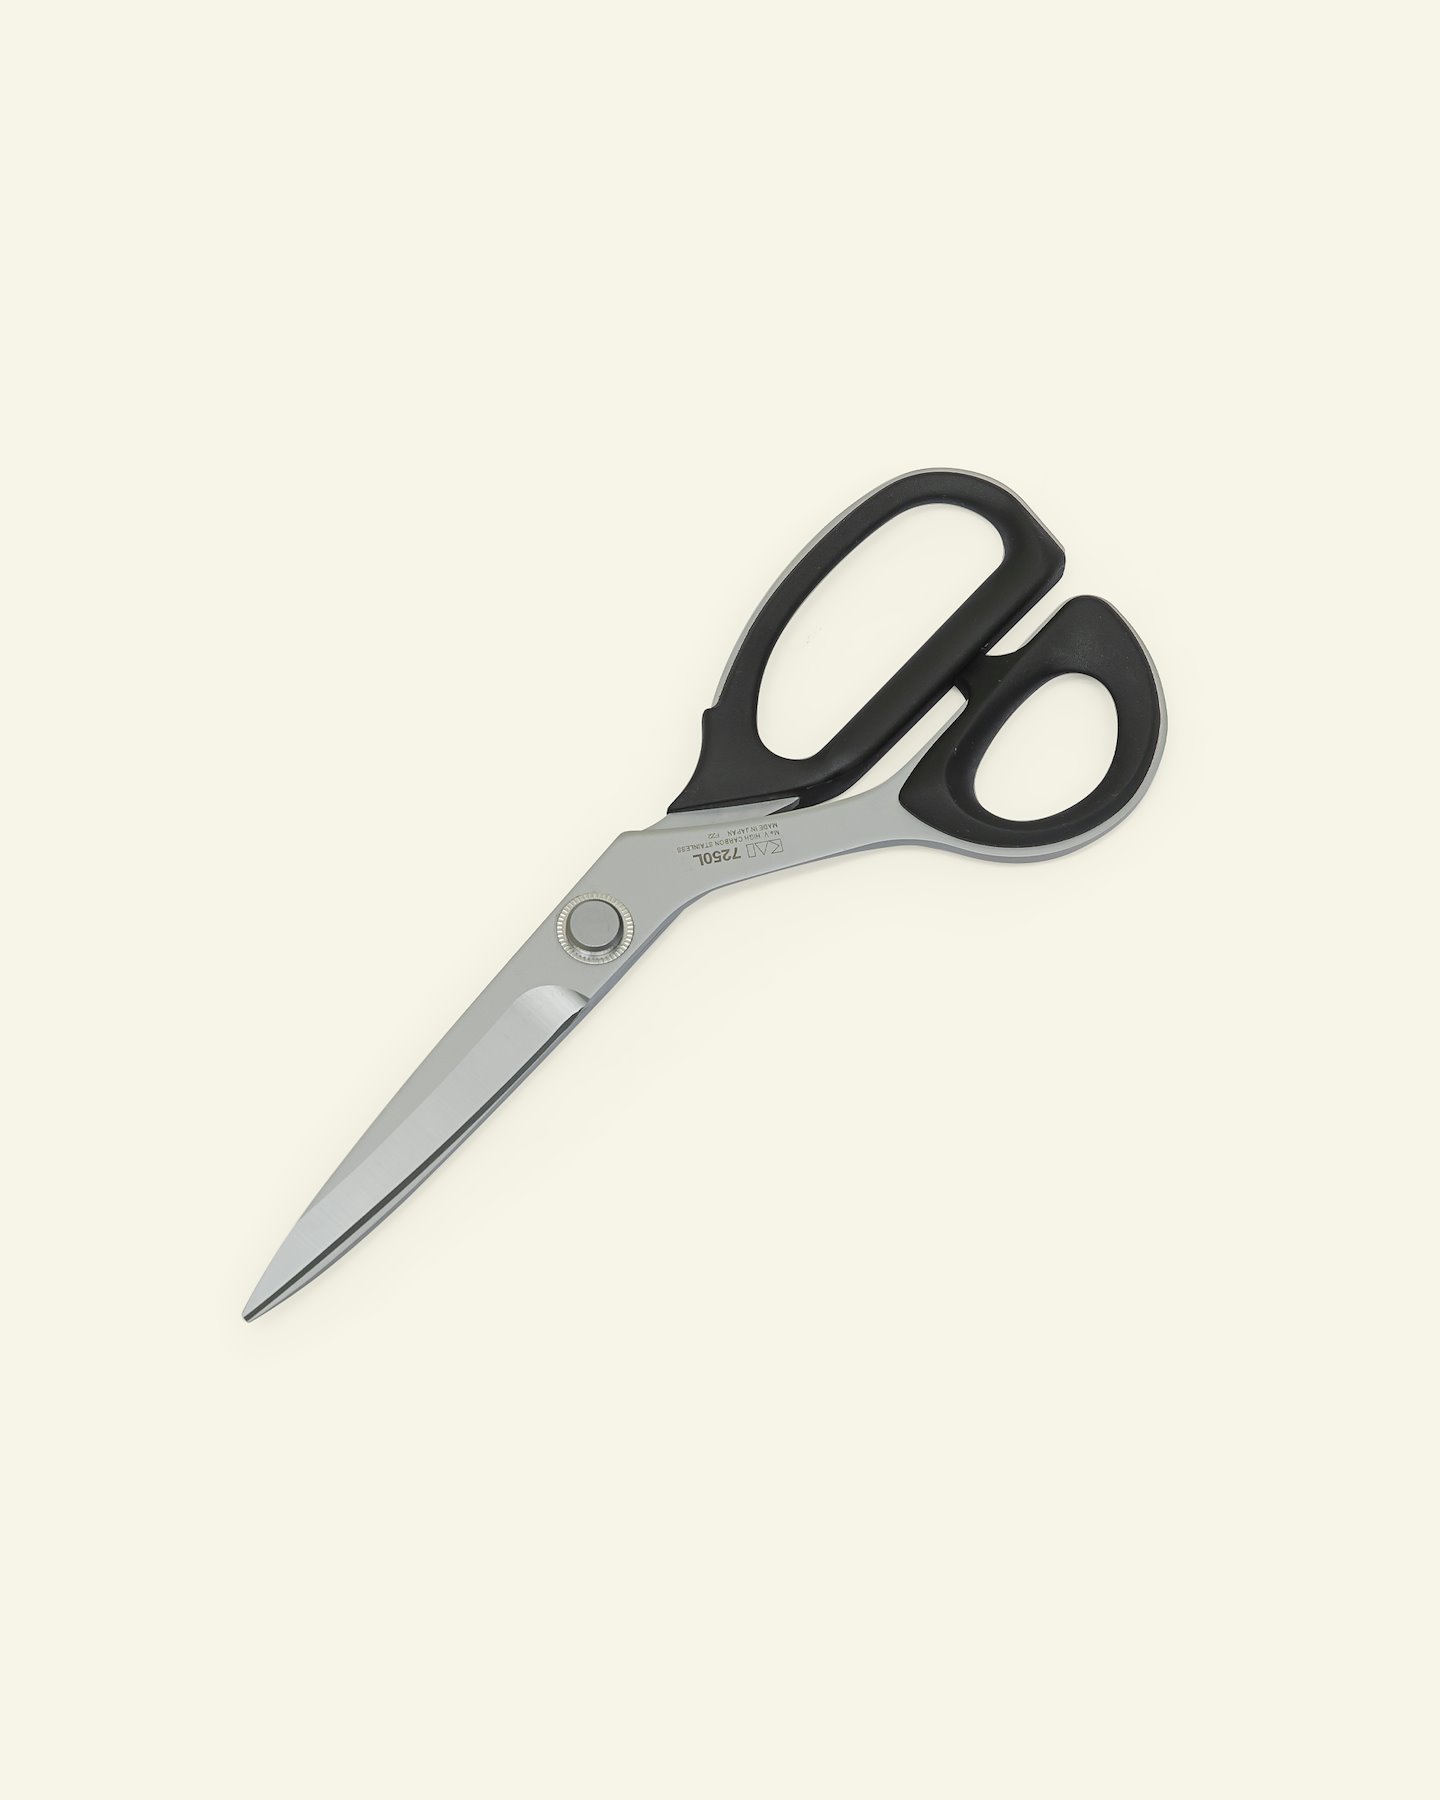 KAI tailor scissors left hand 25cm 42082_pack